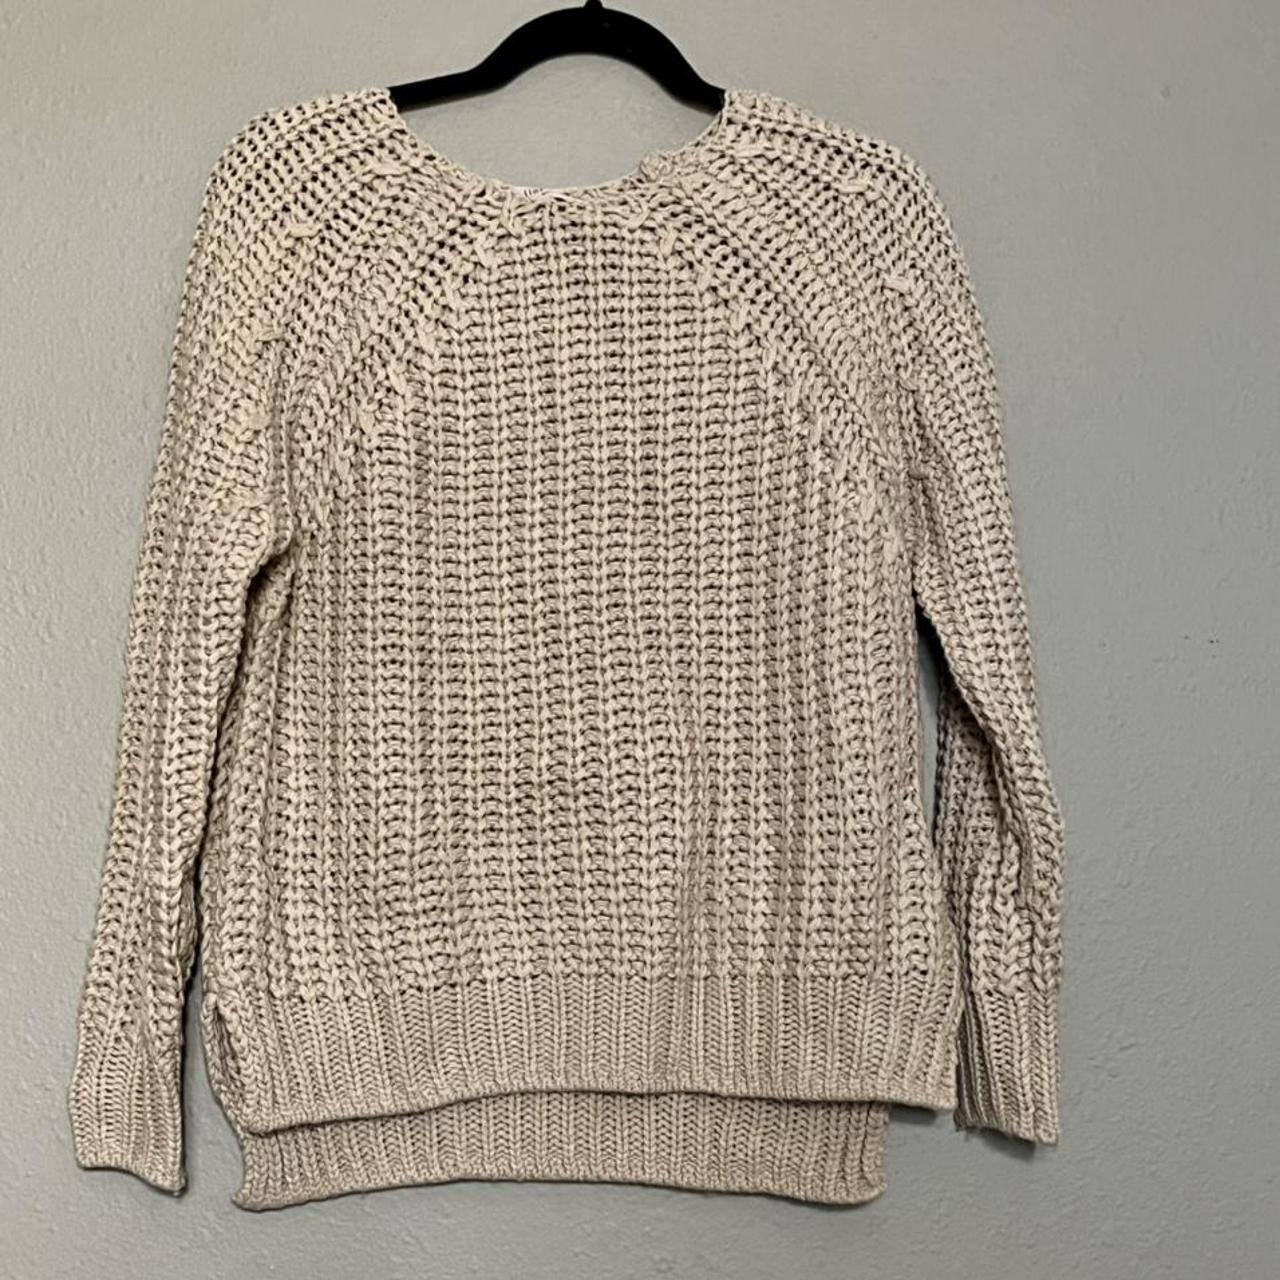 Philosophy Herringbone Knit Sweater Wool blend so... - Depop